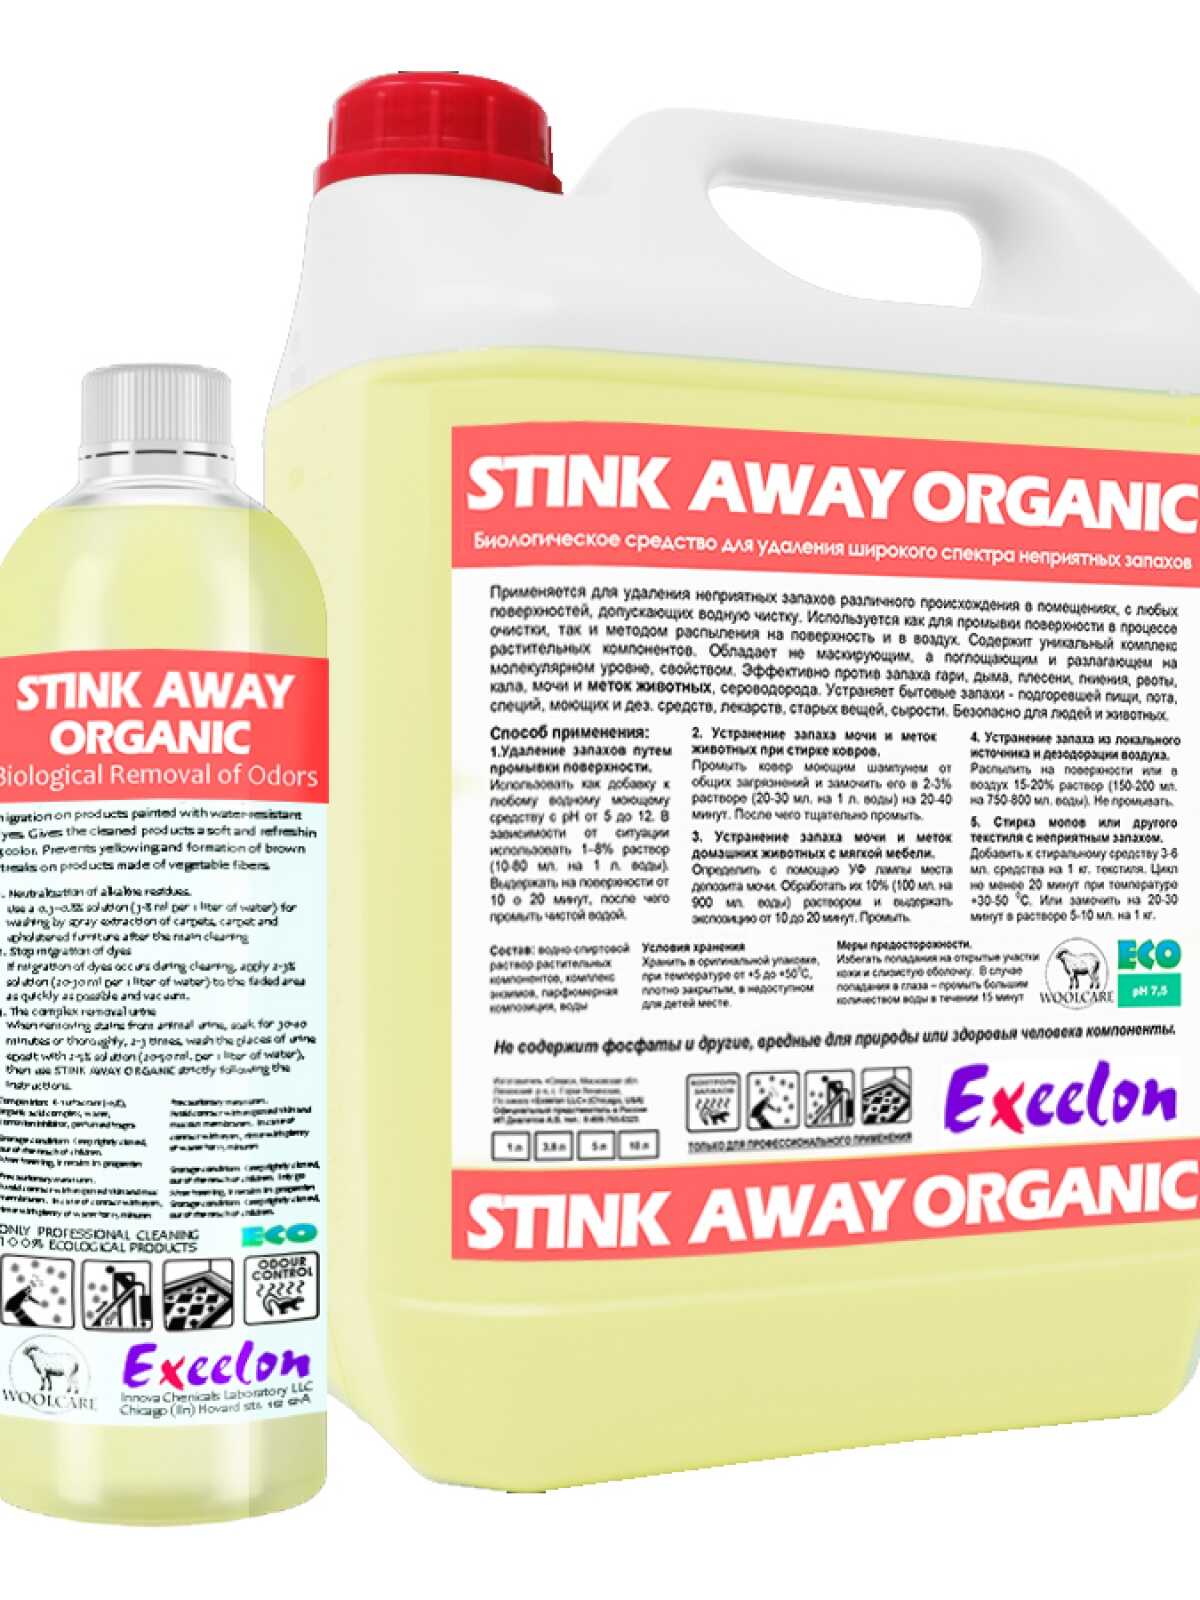 Stink away Organic